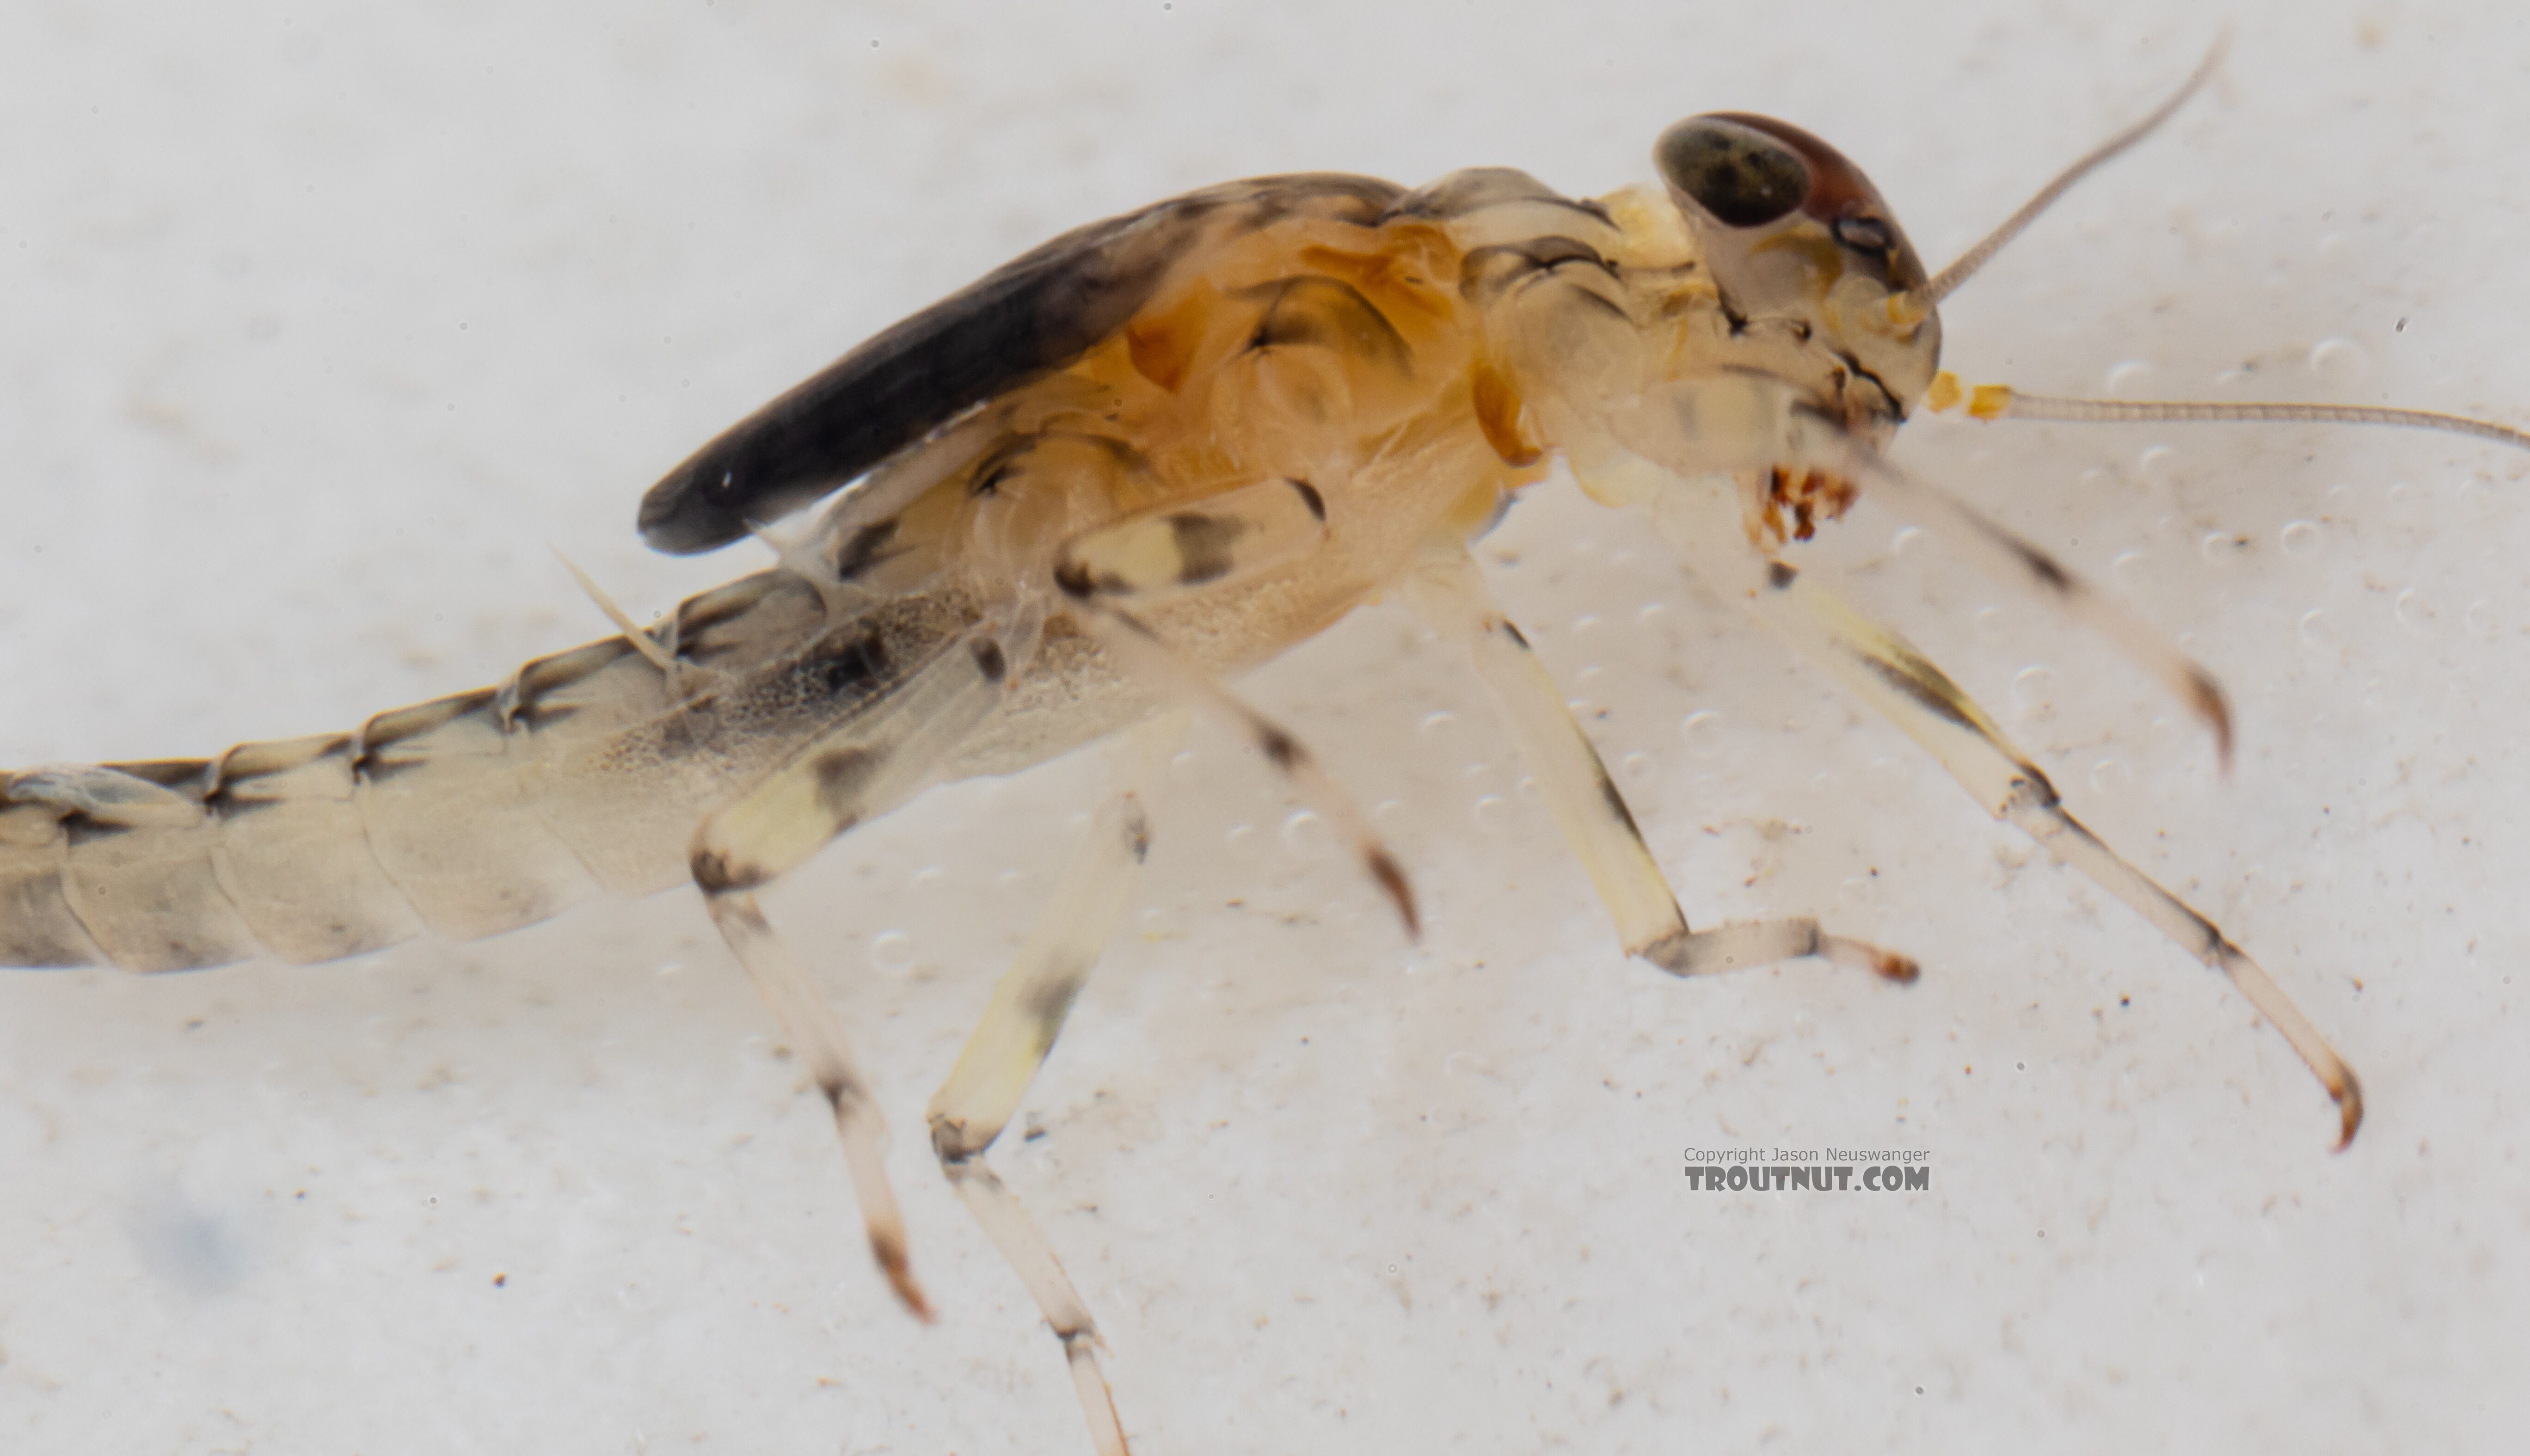 Male Baetis flavistriga (BWO) Mayfly Nymph from Mystery Creek #249 in Washington